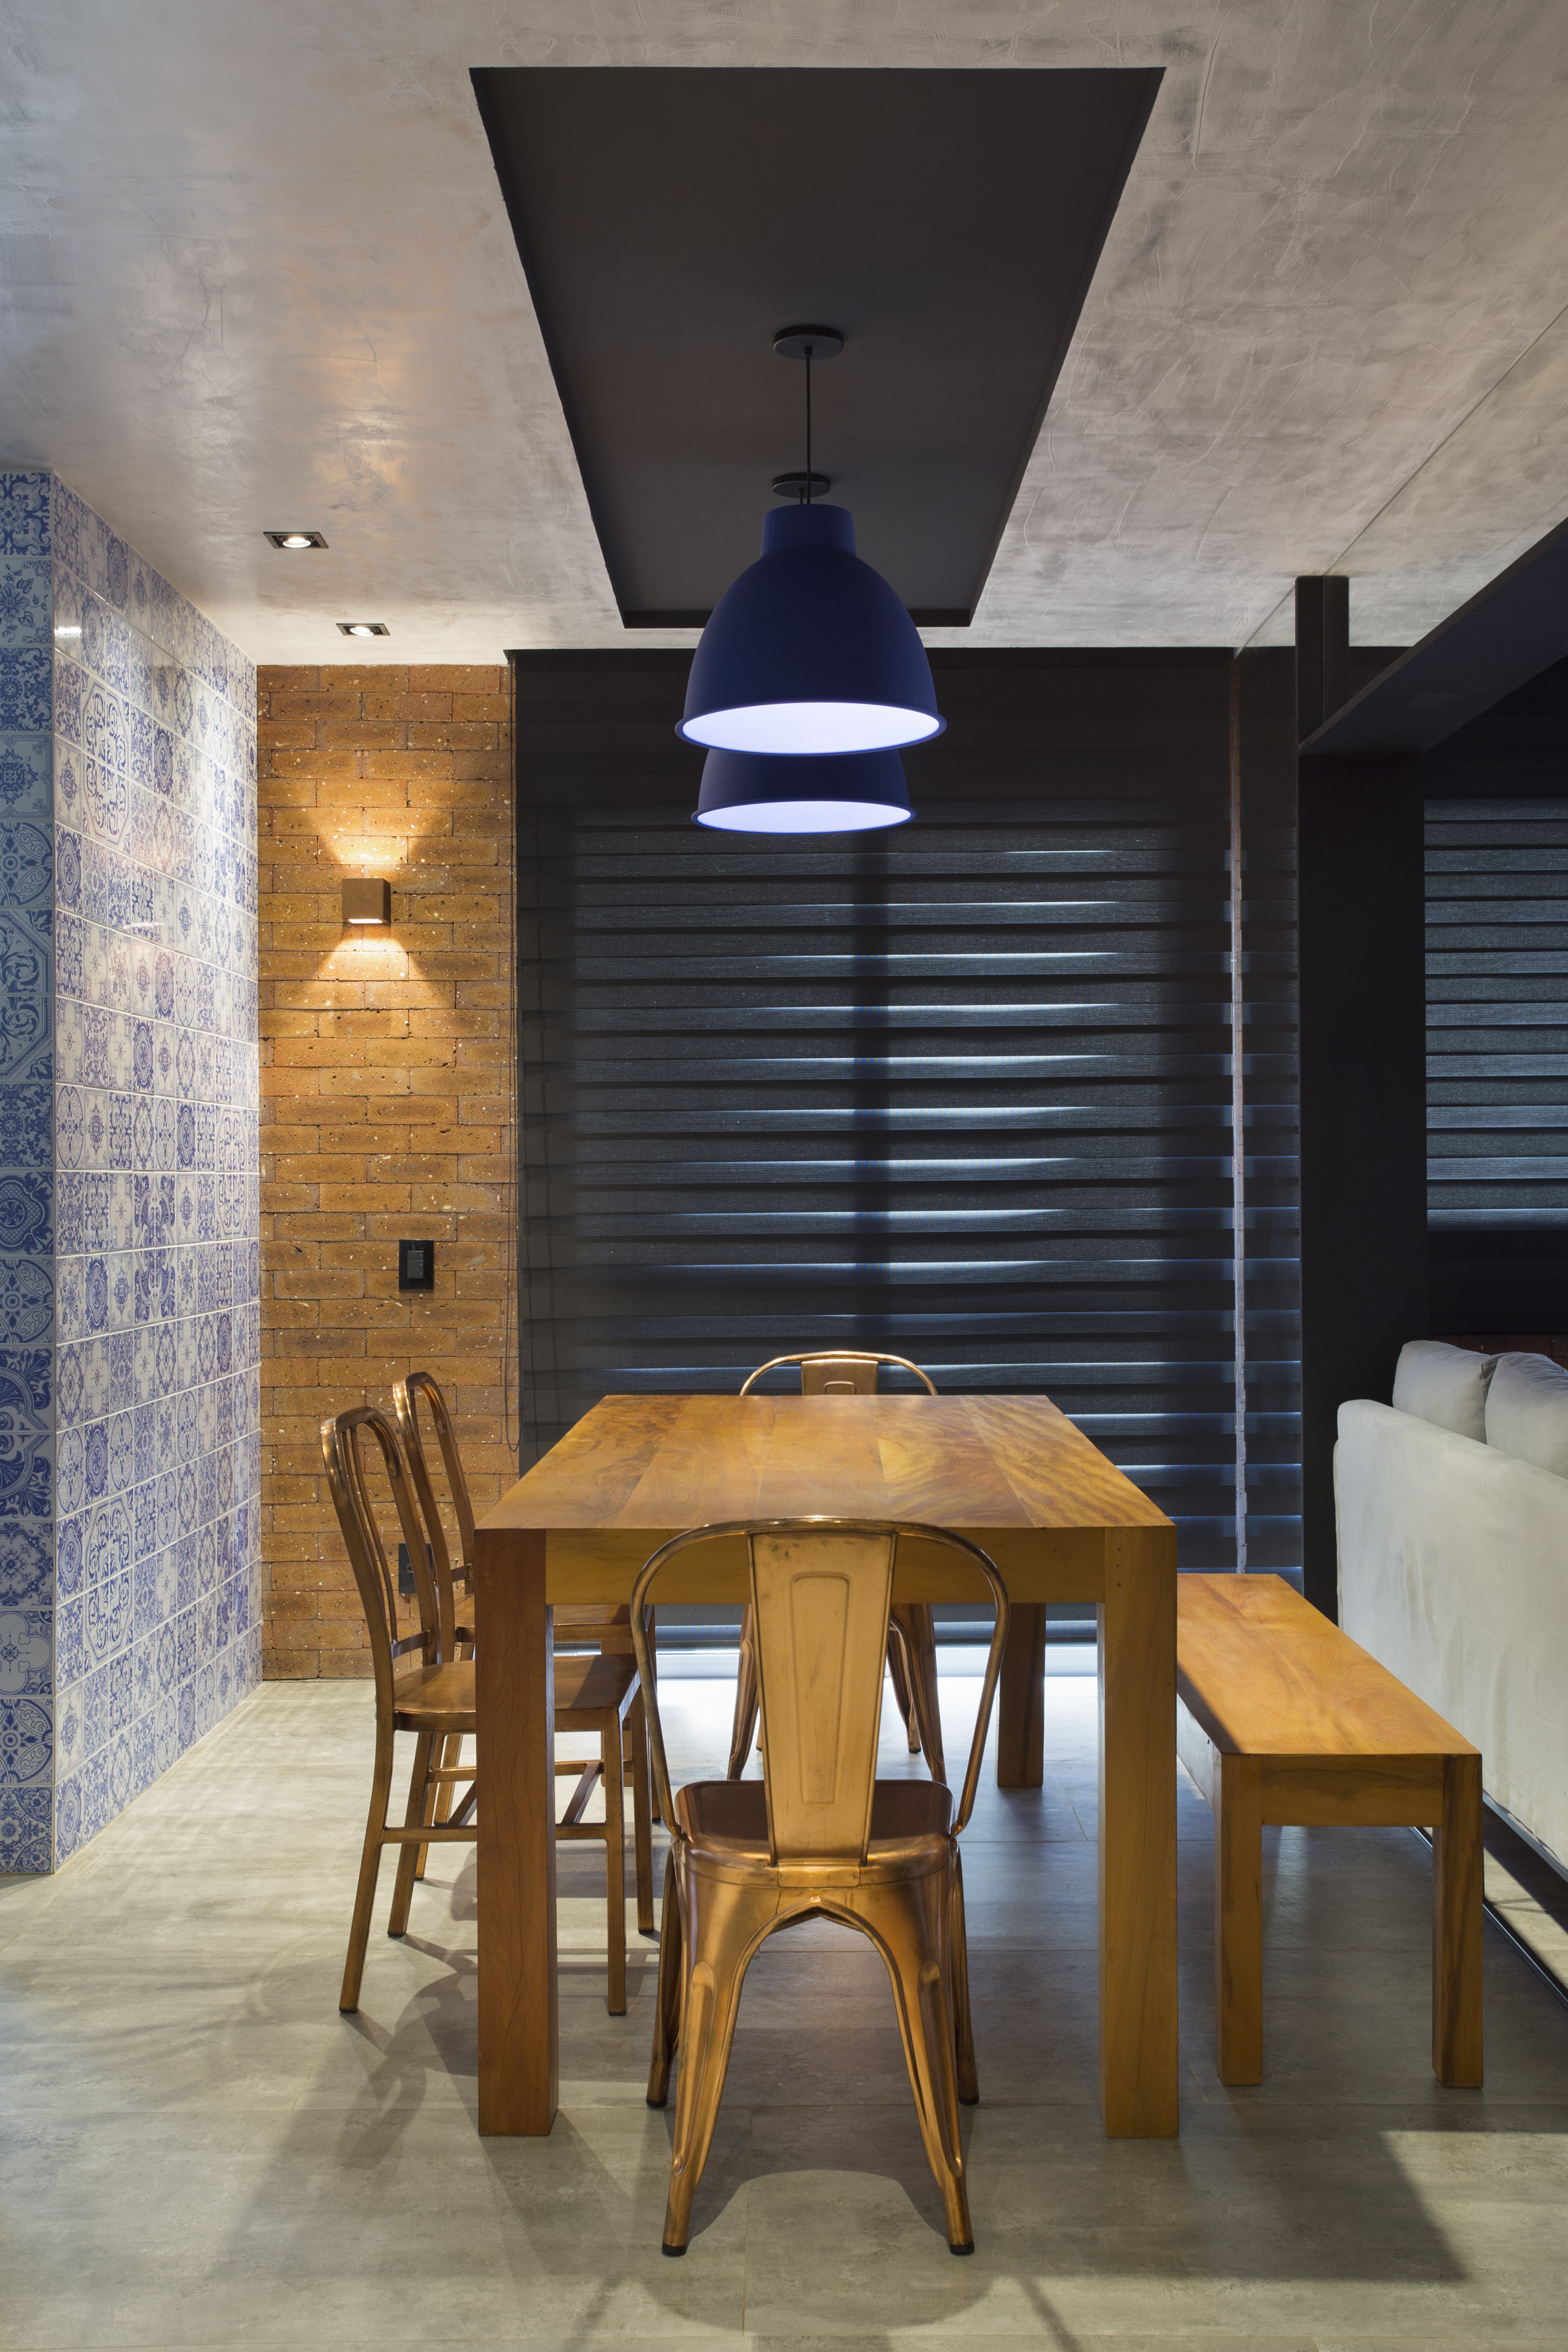 Loft de 70 m² ganha décor industrial inspirado em Nova York. Projeto de Rafael Mirza. Na foto, sala de jantar com mesa, banco e cortina preta.